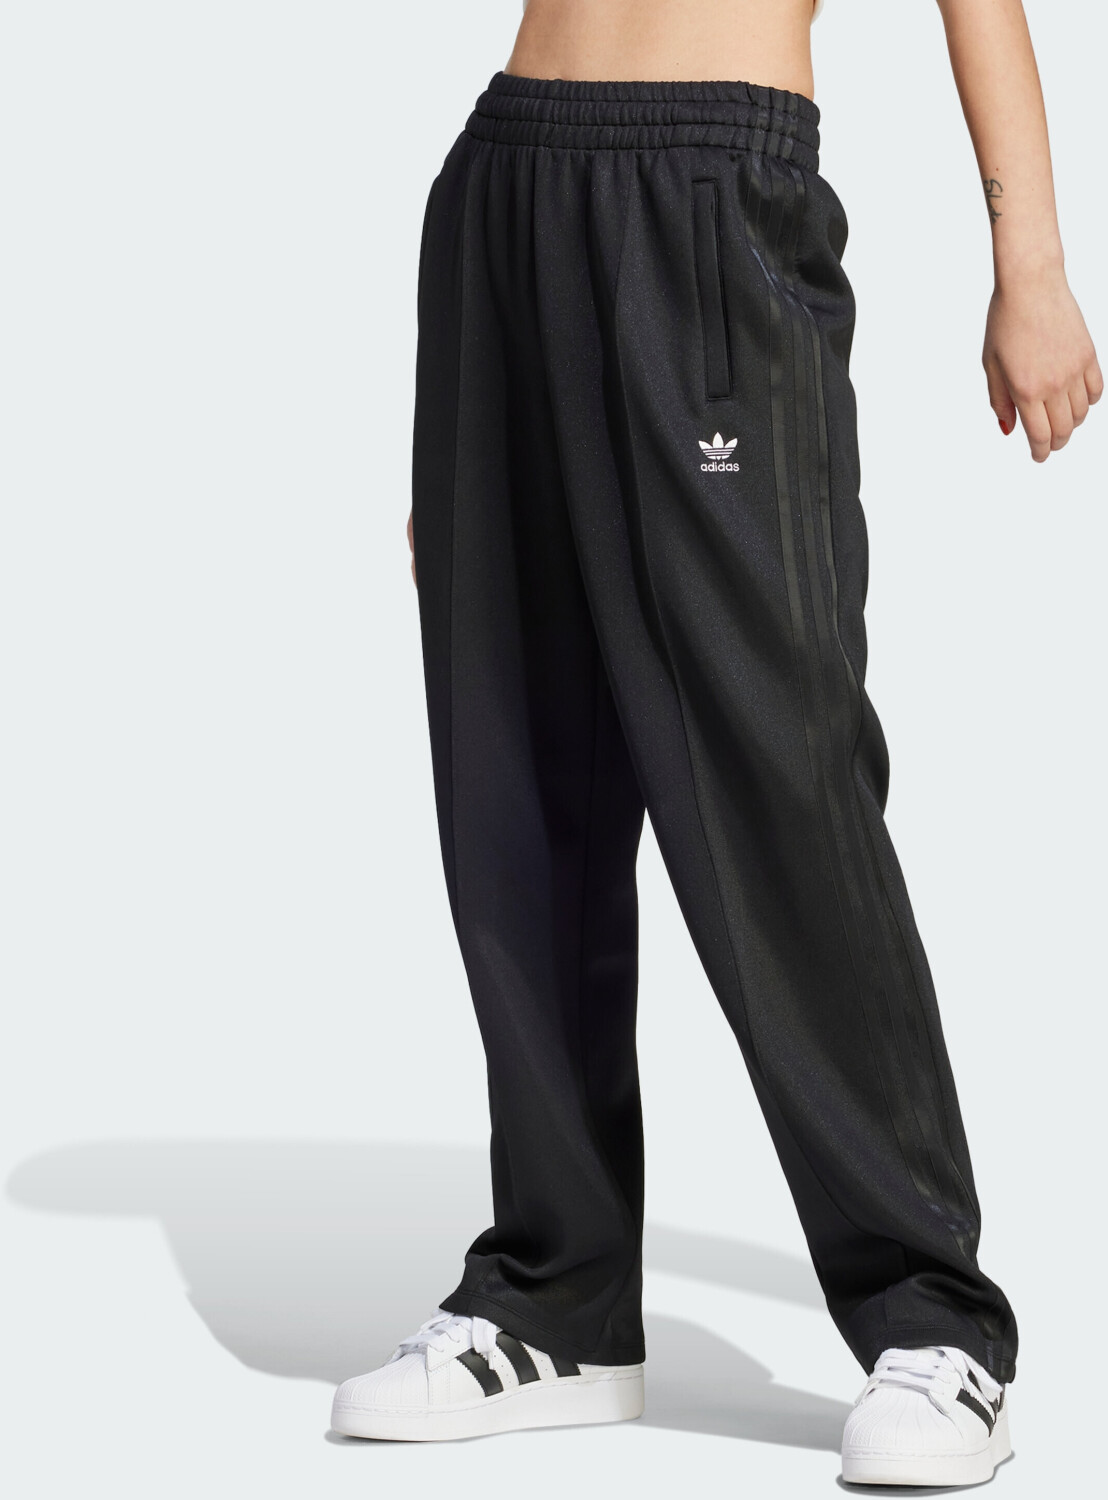 SST adicolor 44,99 ab black € (IK6505) Training Pants Woman Classics | Adidas bei Preisvergleich Oversized